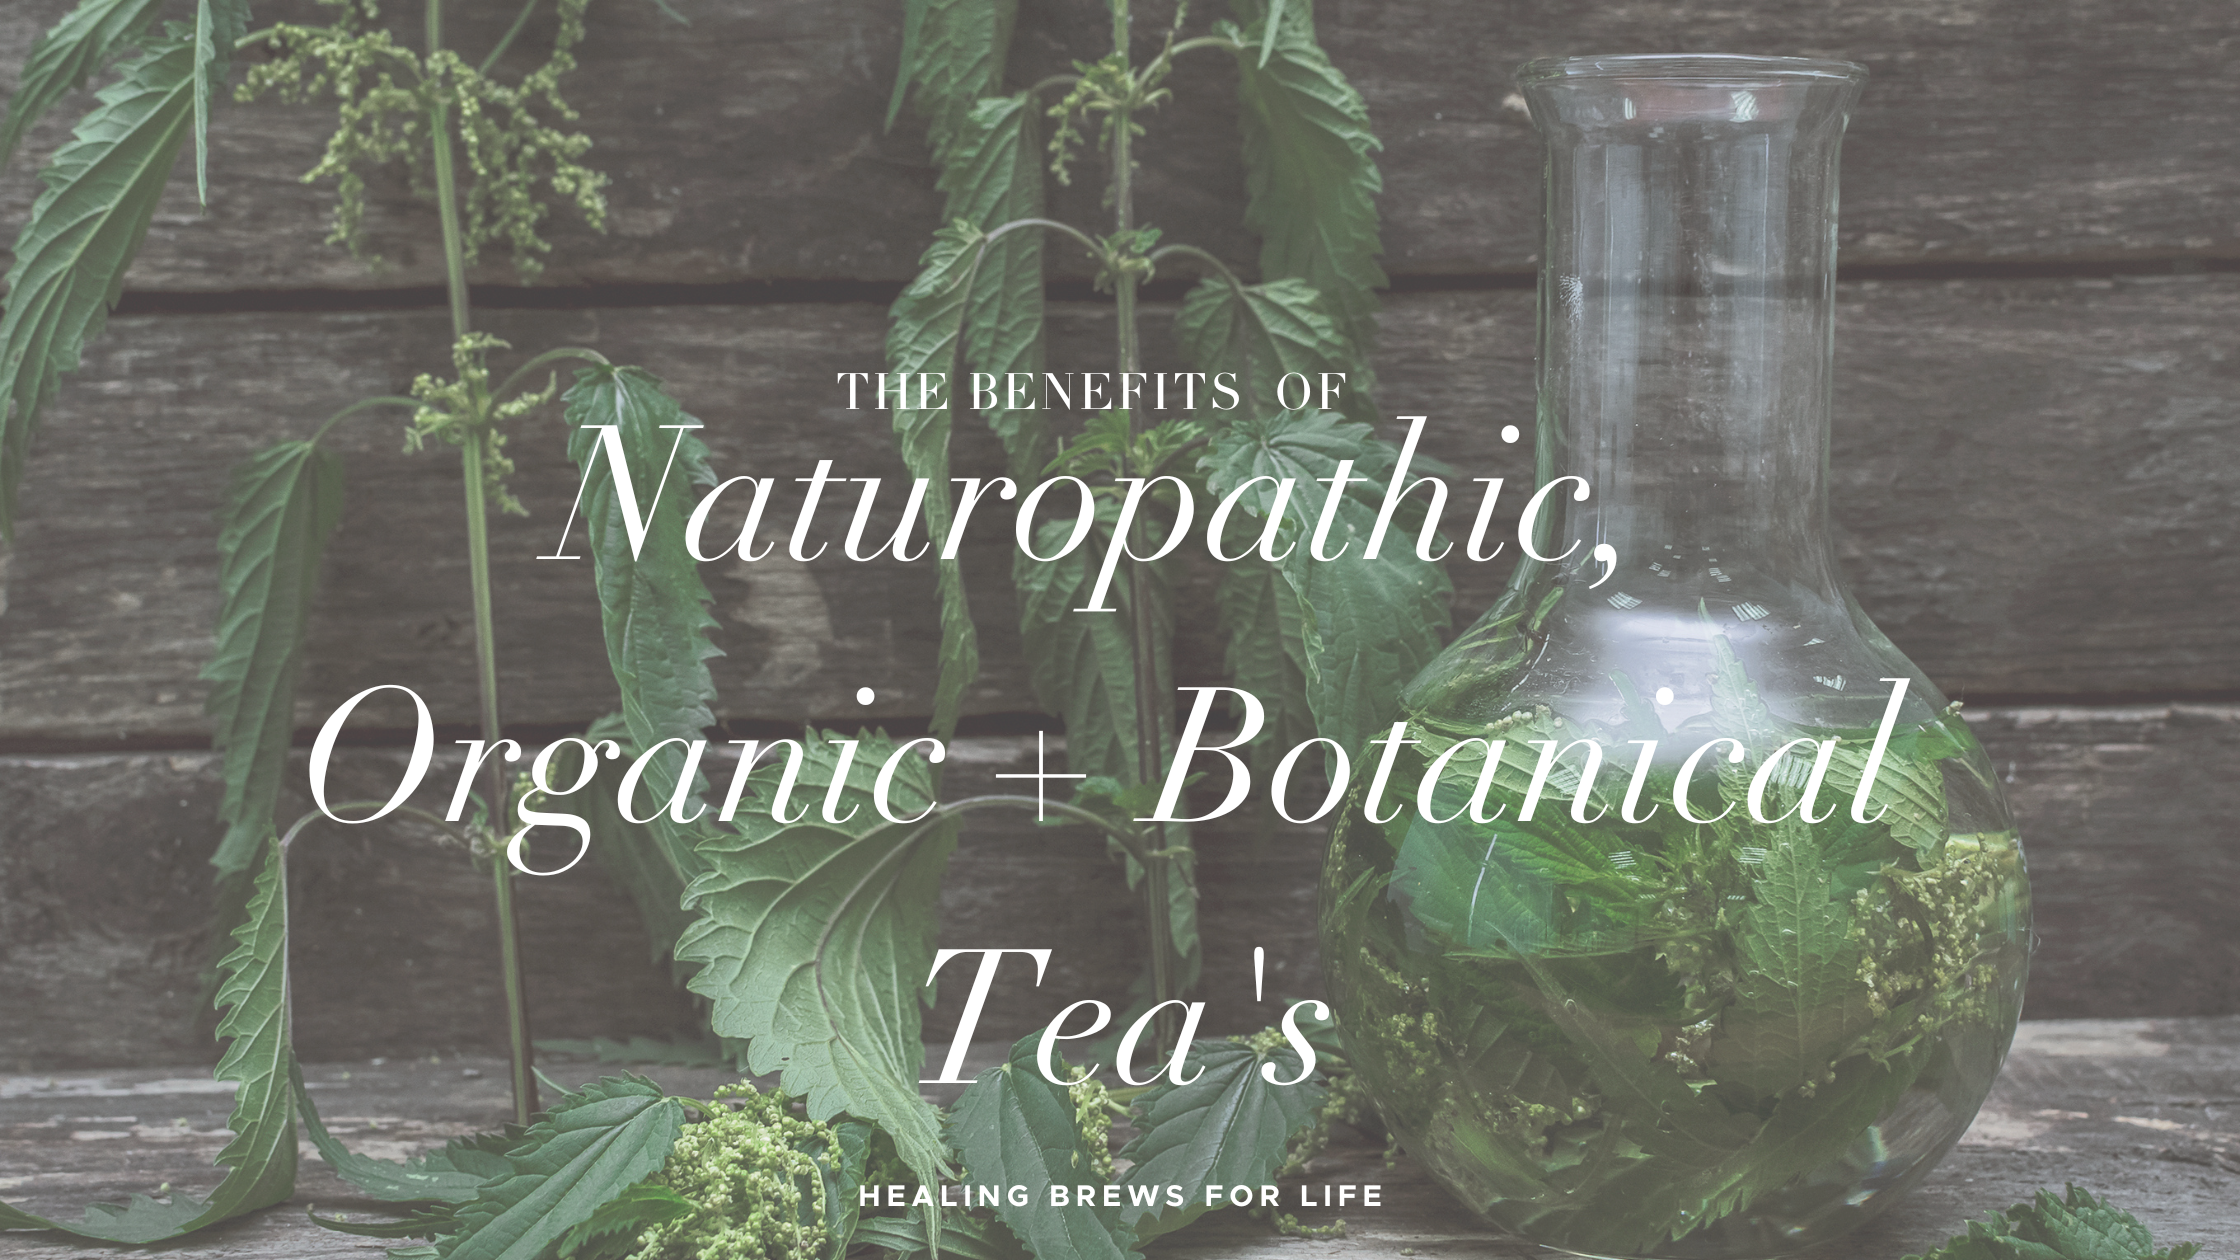 The benefits of naturopathic botanical organic teas